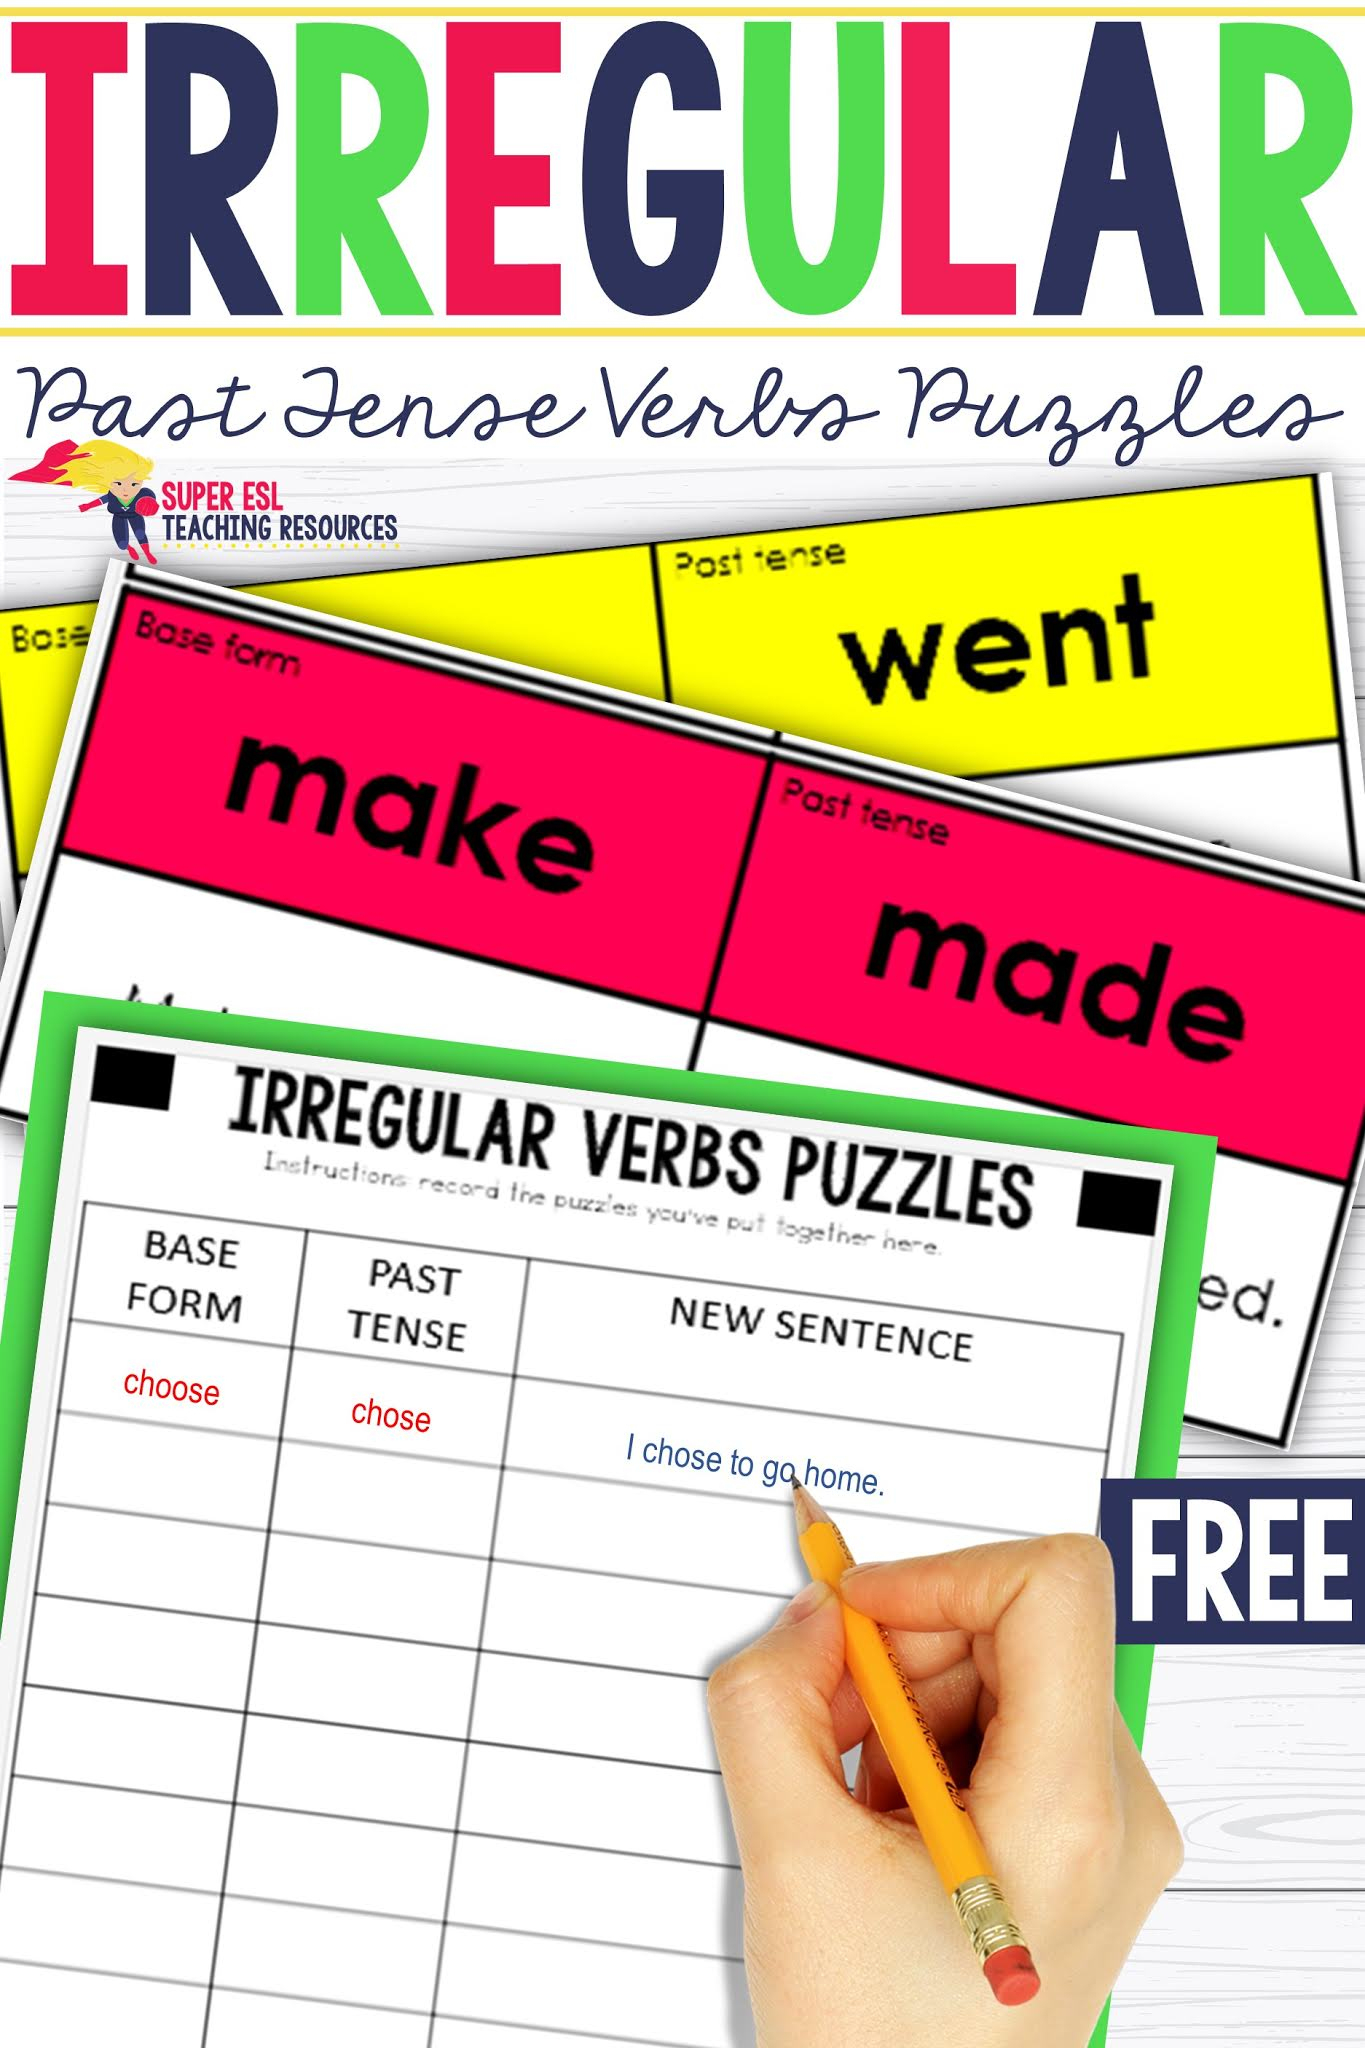 Irregular Verbs Self-Correcting Puzzles Engaging And Simple! - Free Printable Verb Games